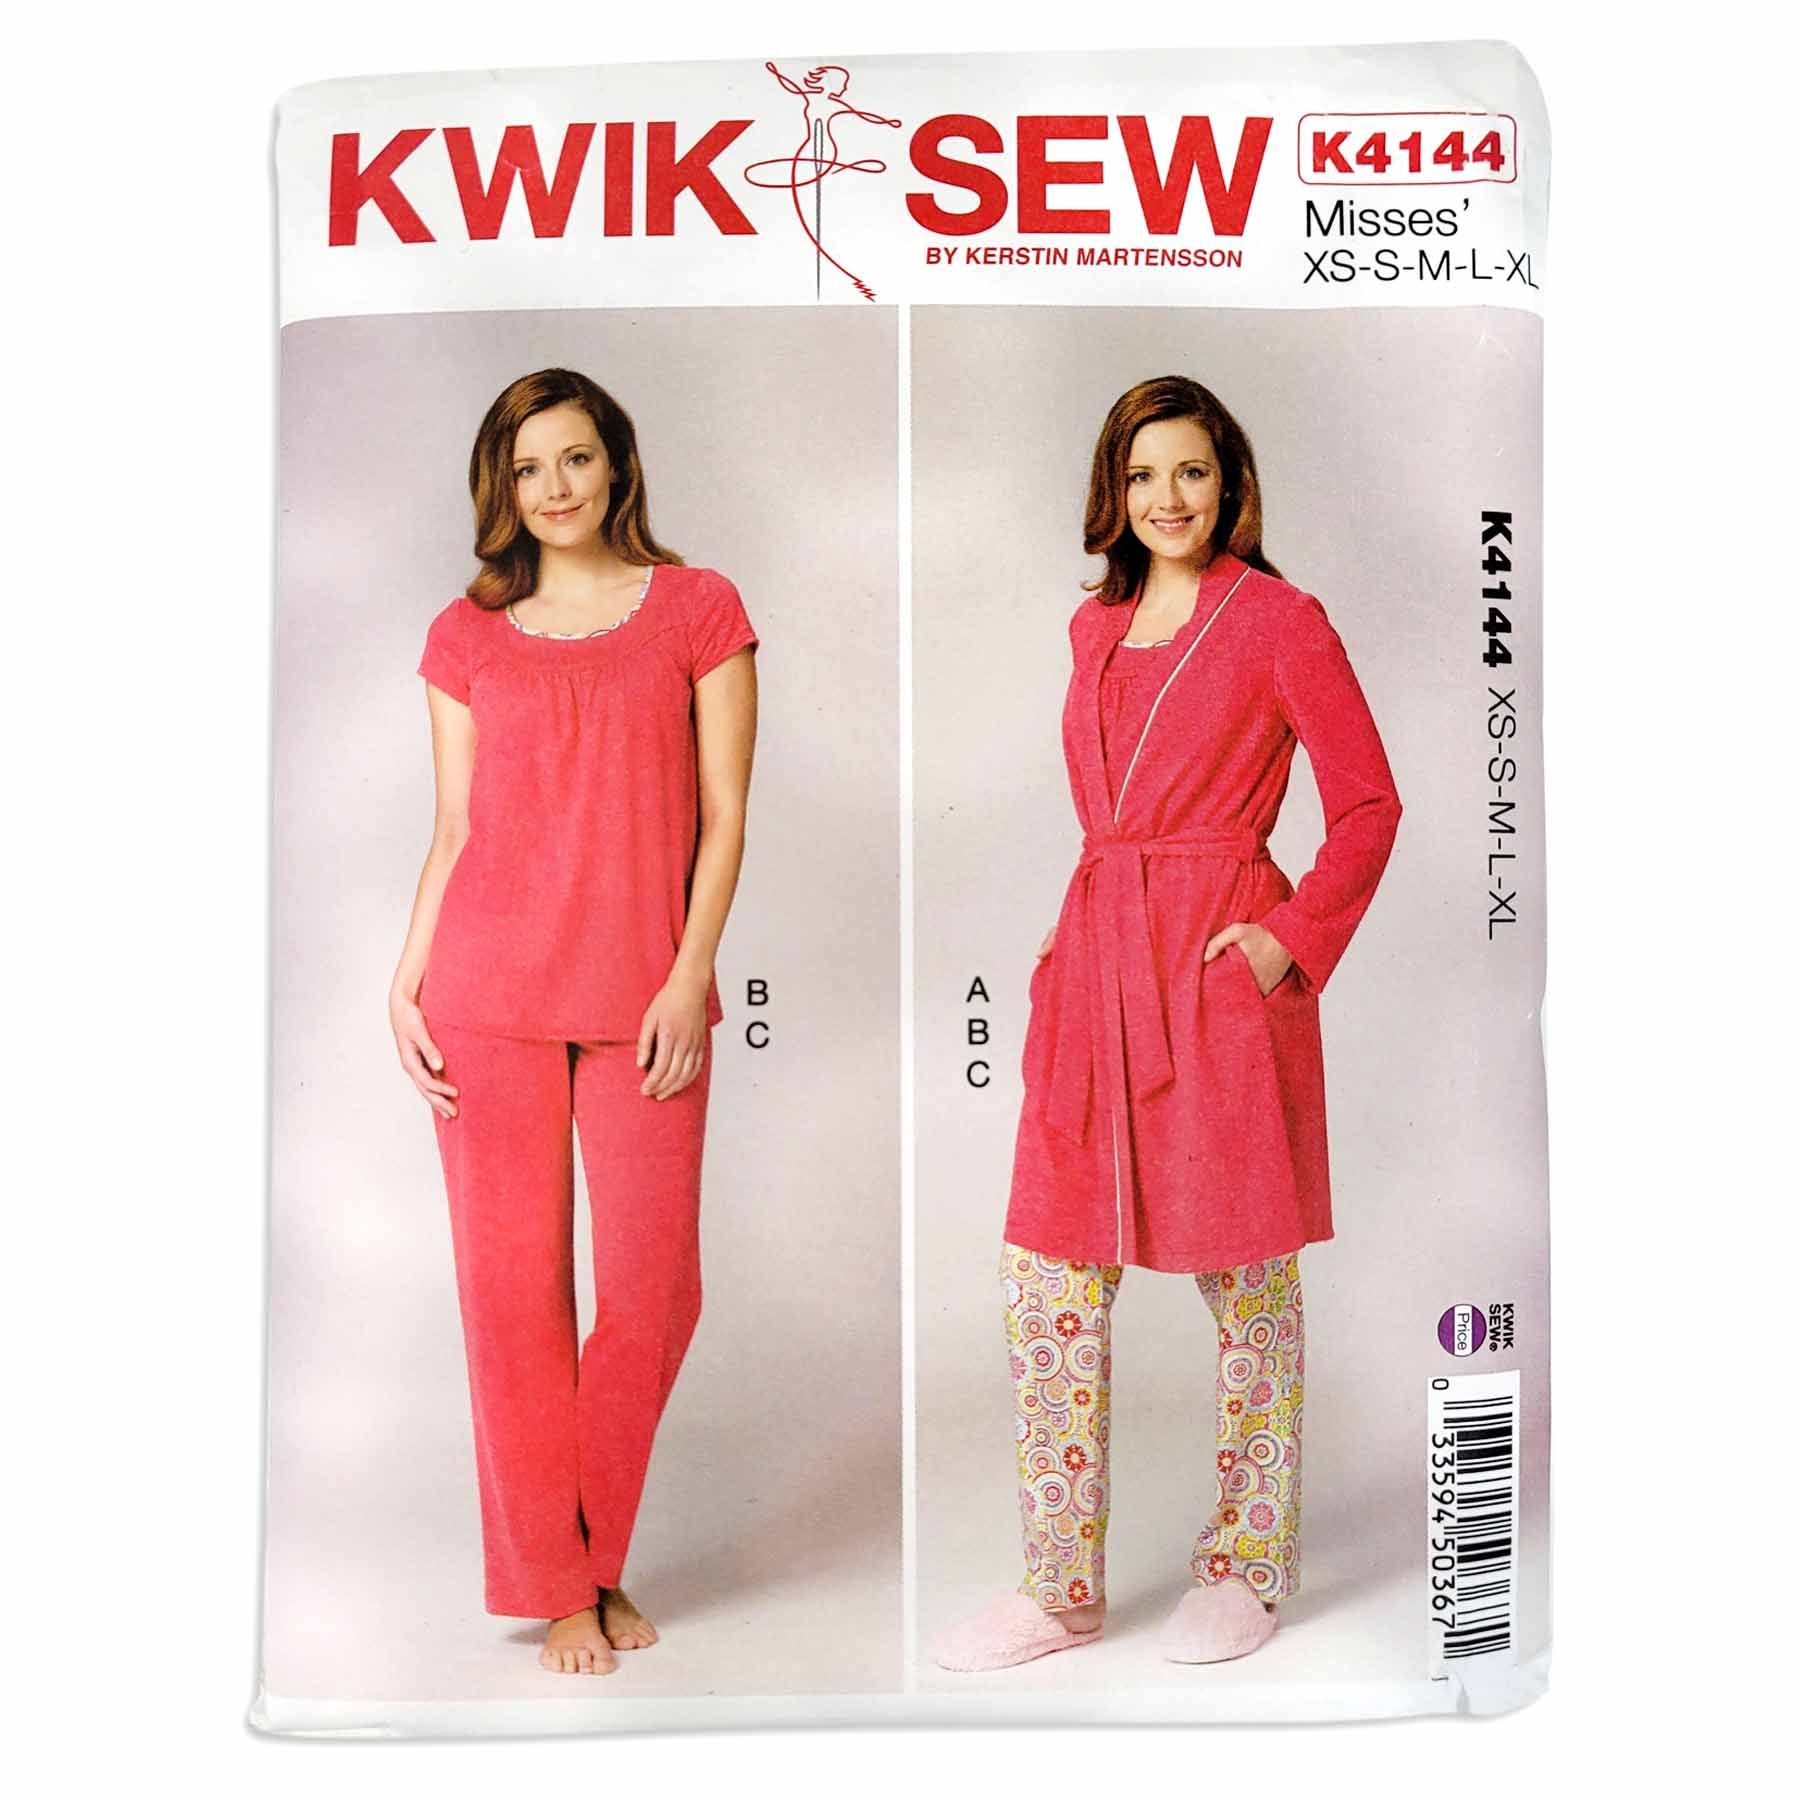 Kwik-Sew Misses' Robe, Belt, Top, and PJ Pants Pattern